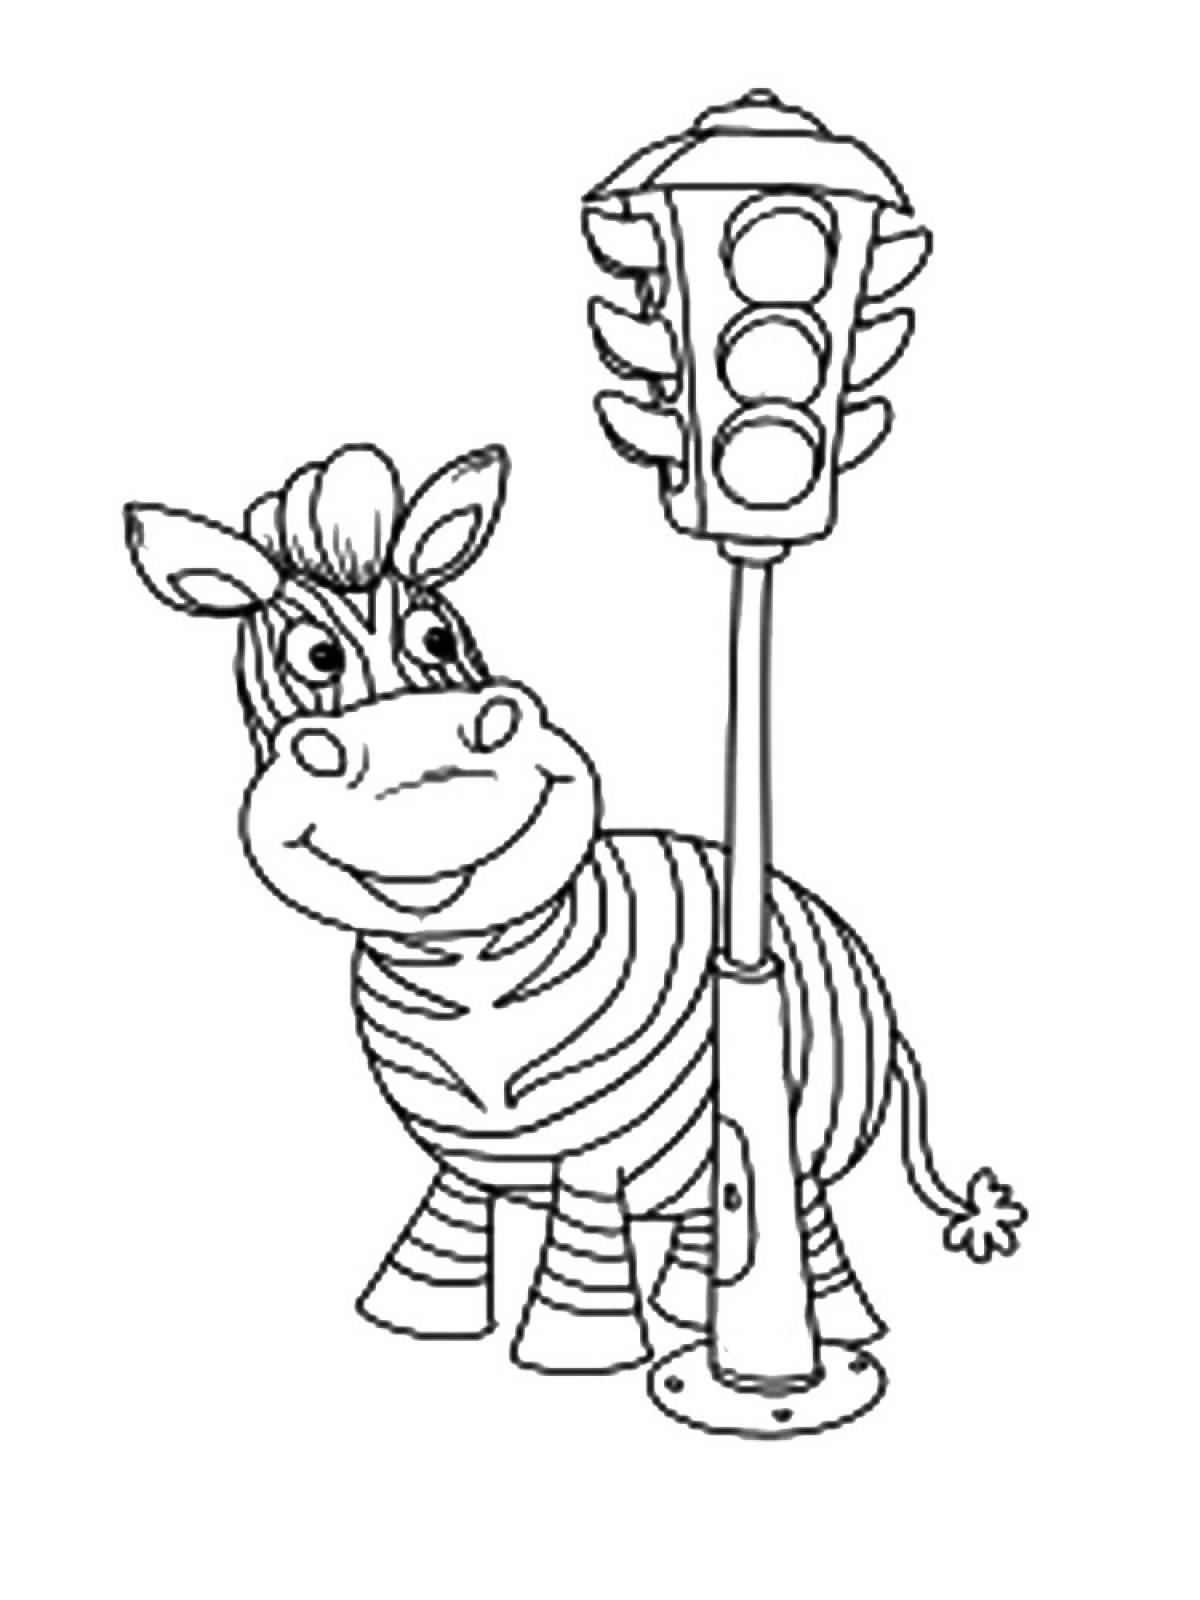 Детские рисунки пдд зебра